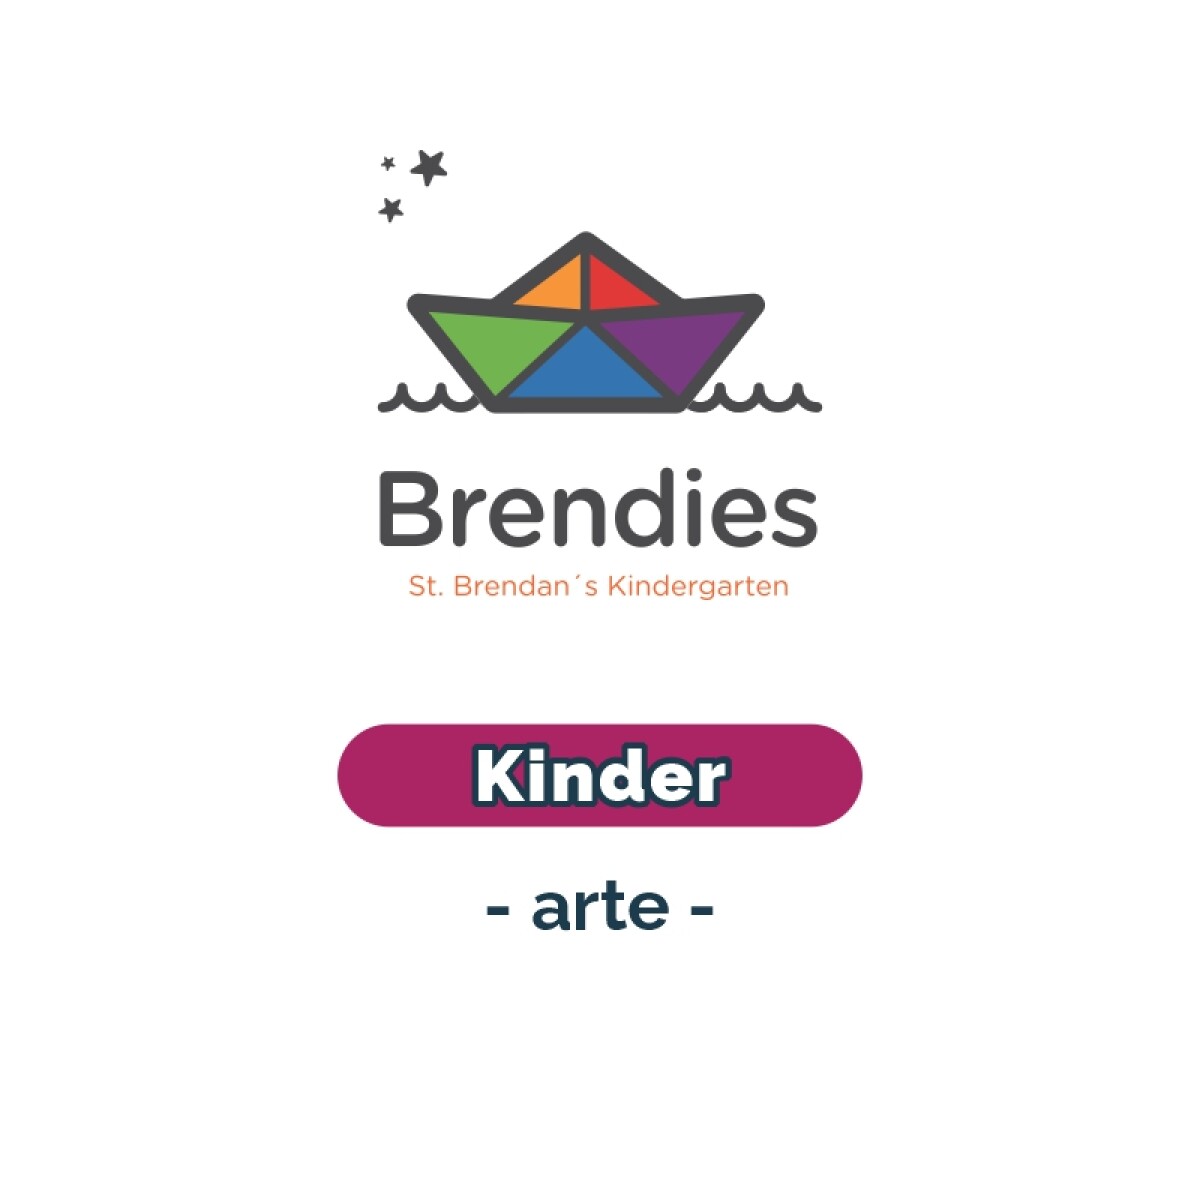 Lista de materiales - Brendies Kinder arte SB 